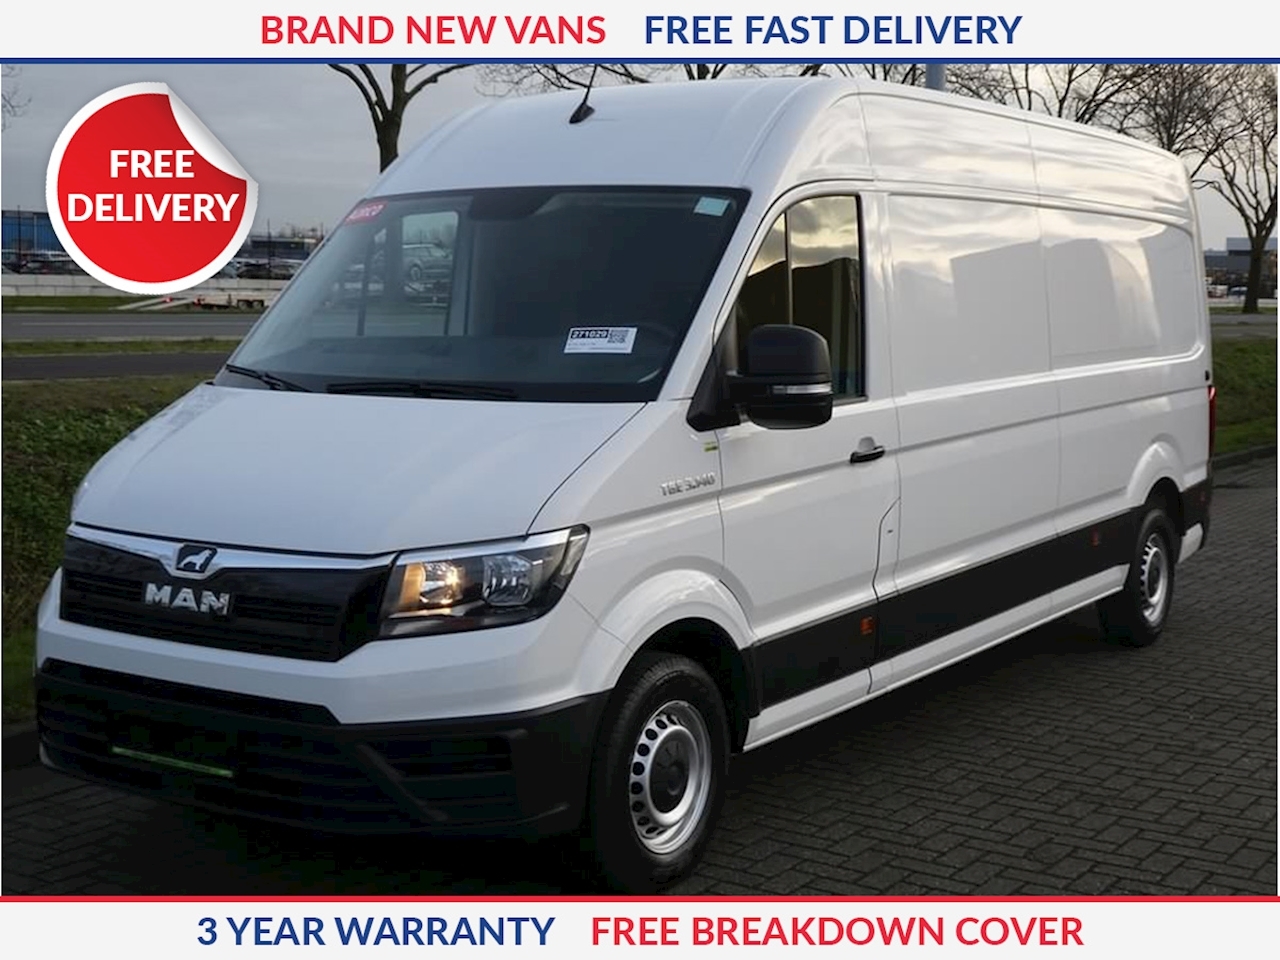 man vans for sale uk